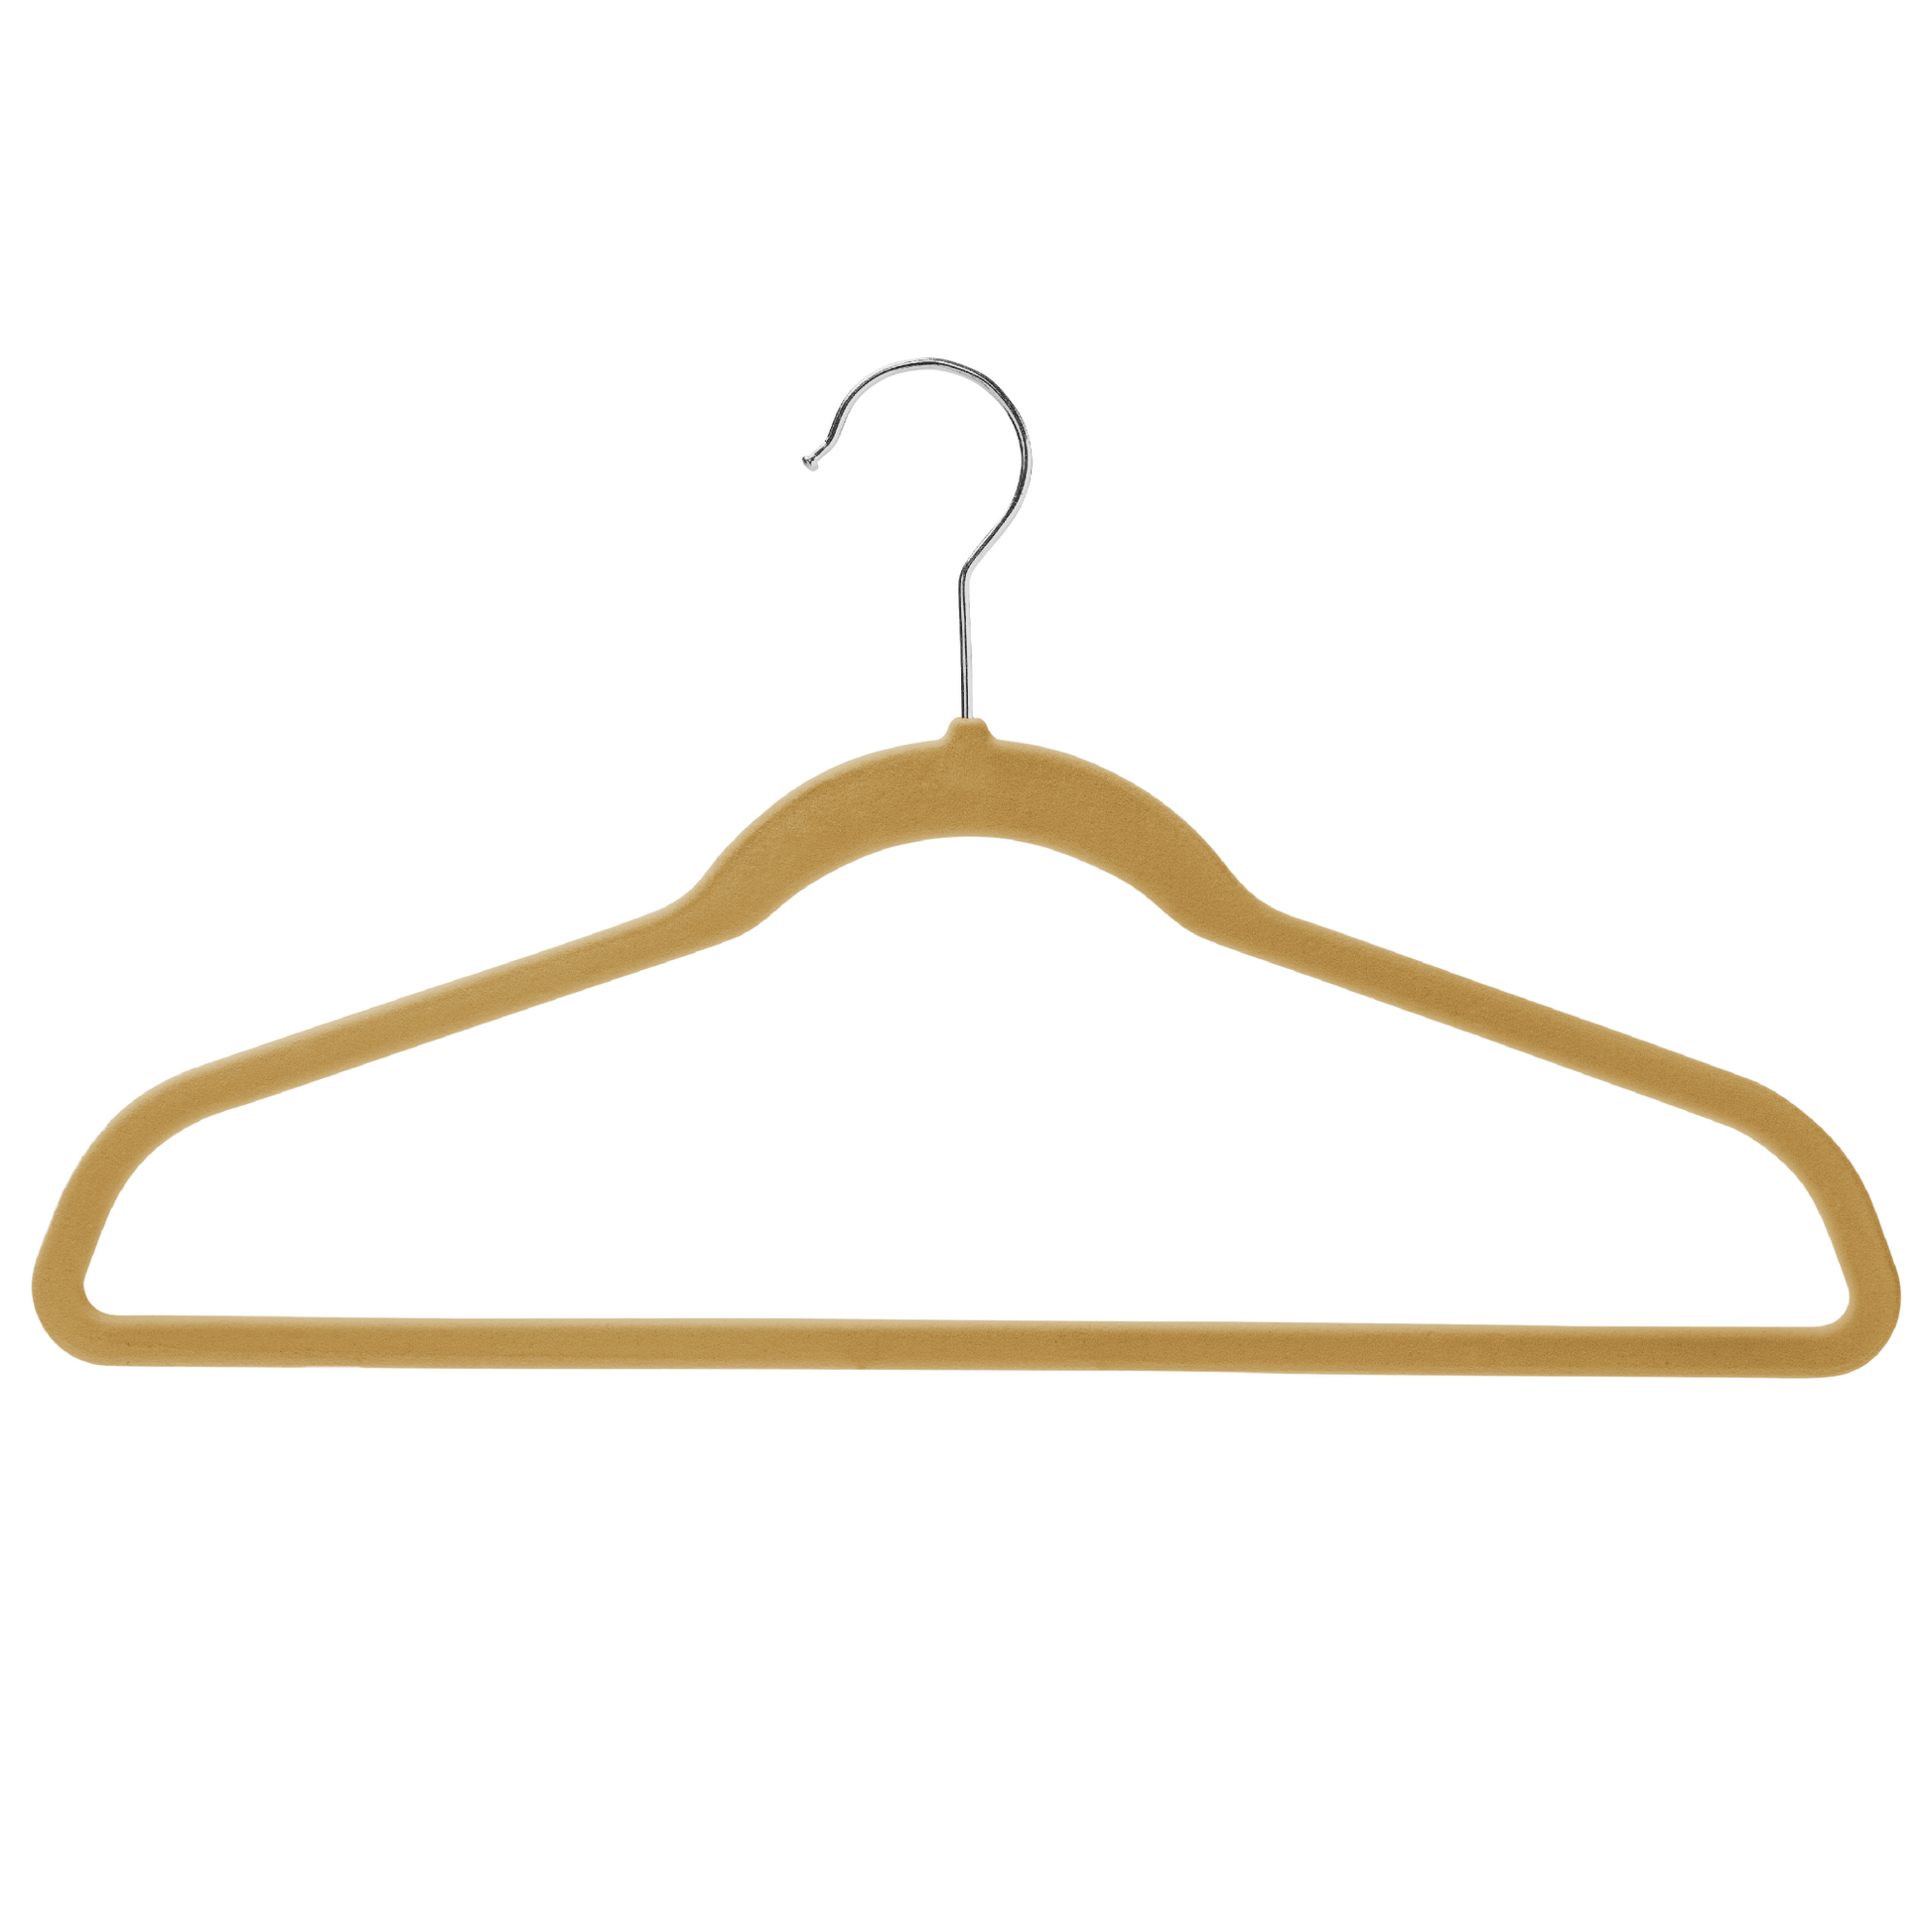 43cm Slim-Line Camel Velvet Coat Hanger with Chrome Hook Sold in Bundles of 20/50/100 - Rackshop Australia